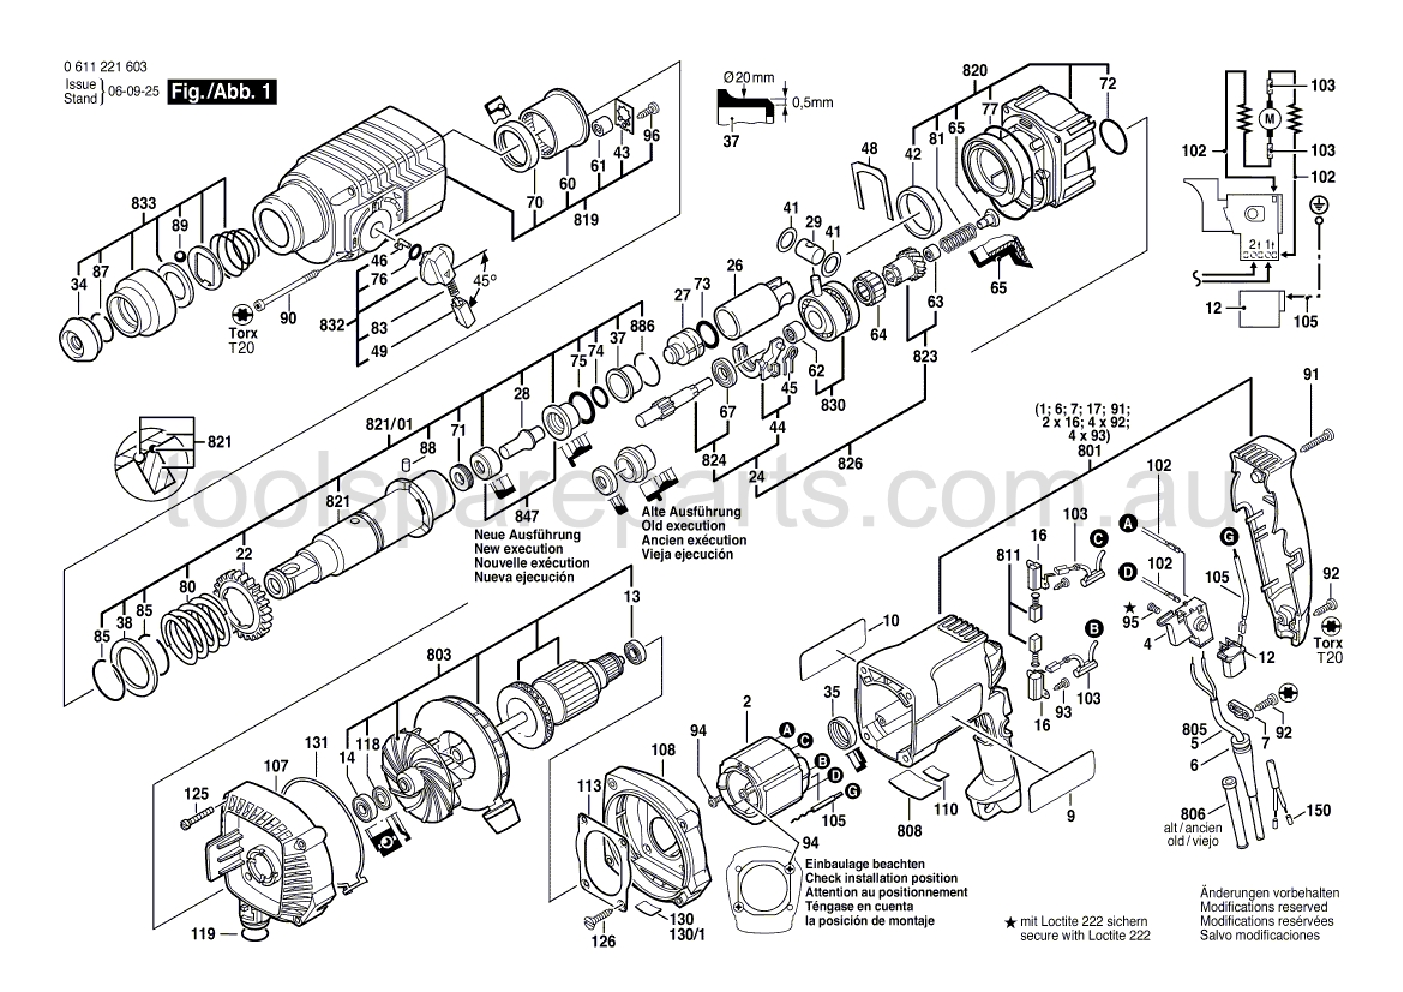 Bosch GAH 500 DSE 0611221637  Diagram 1